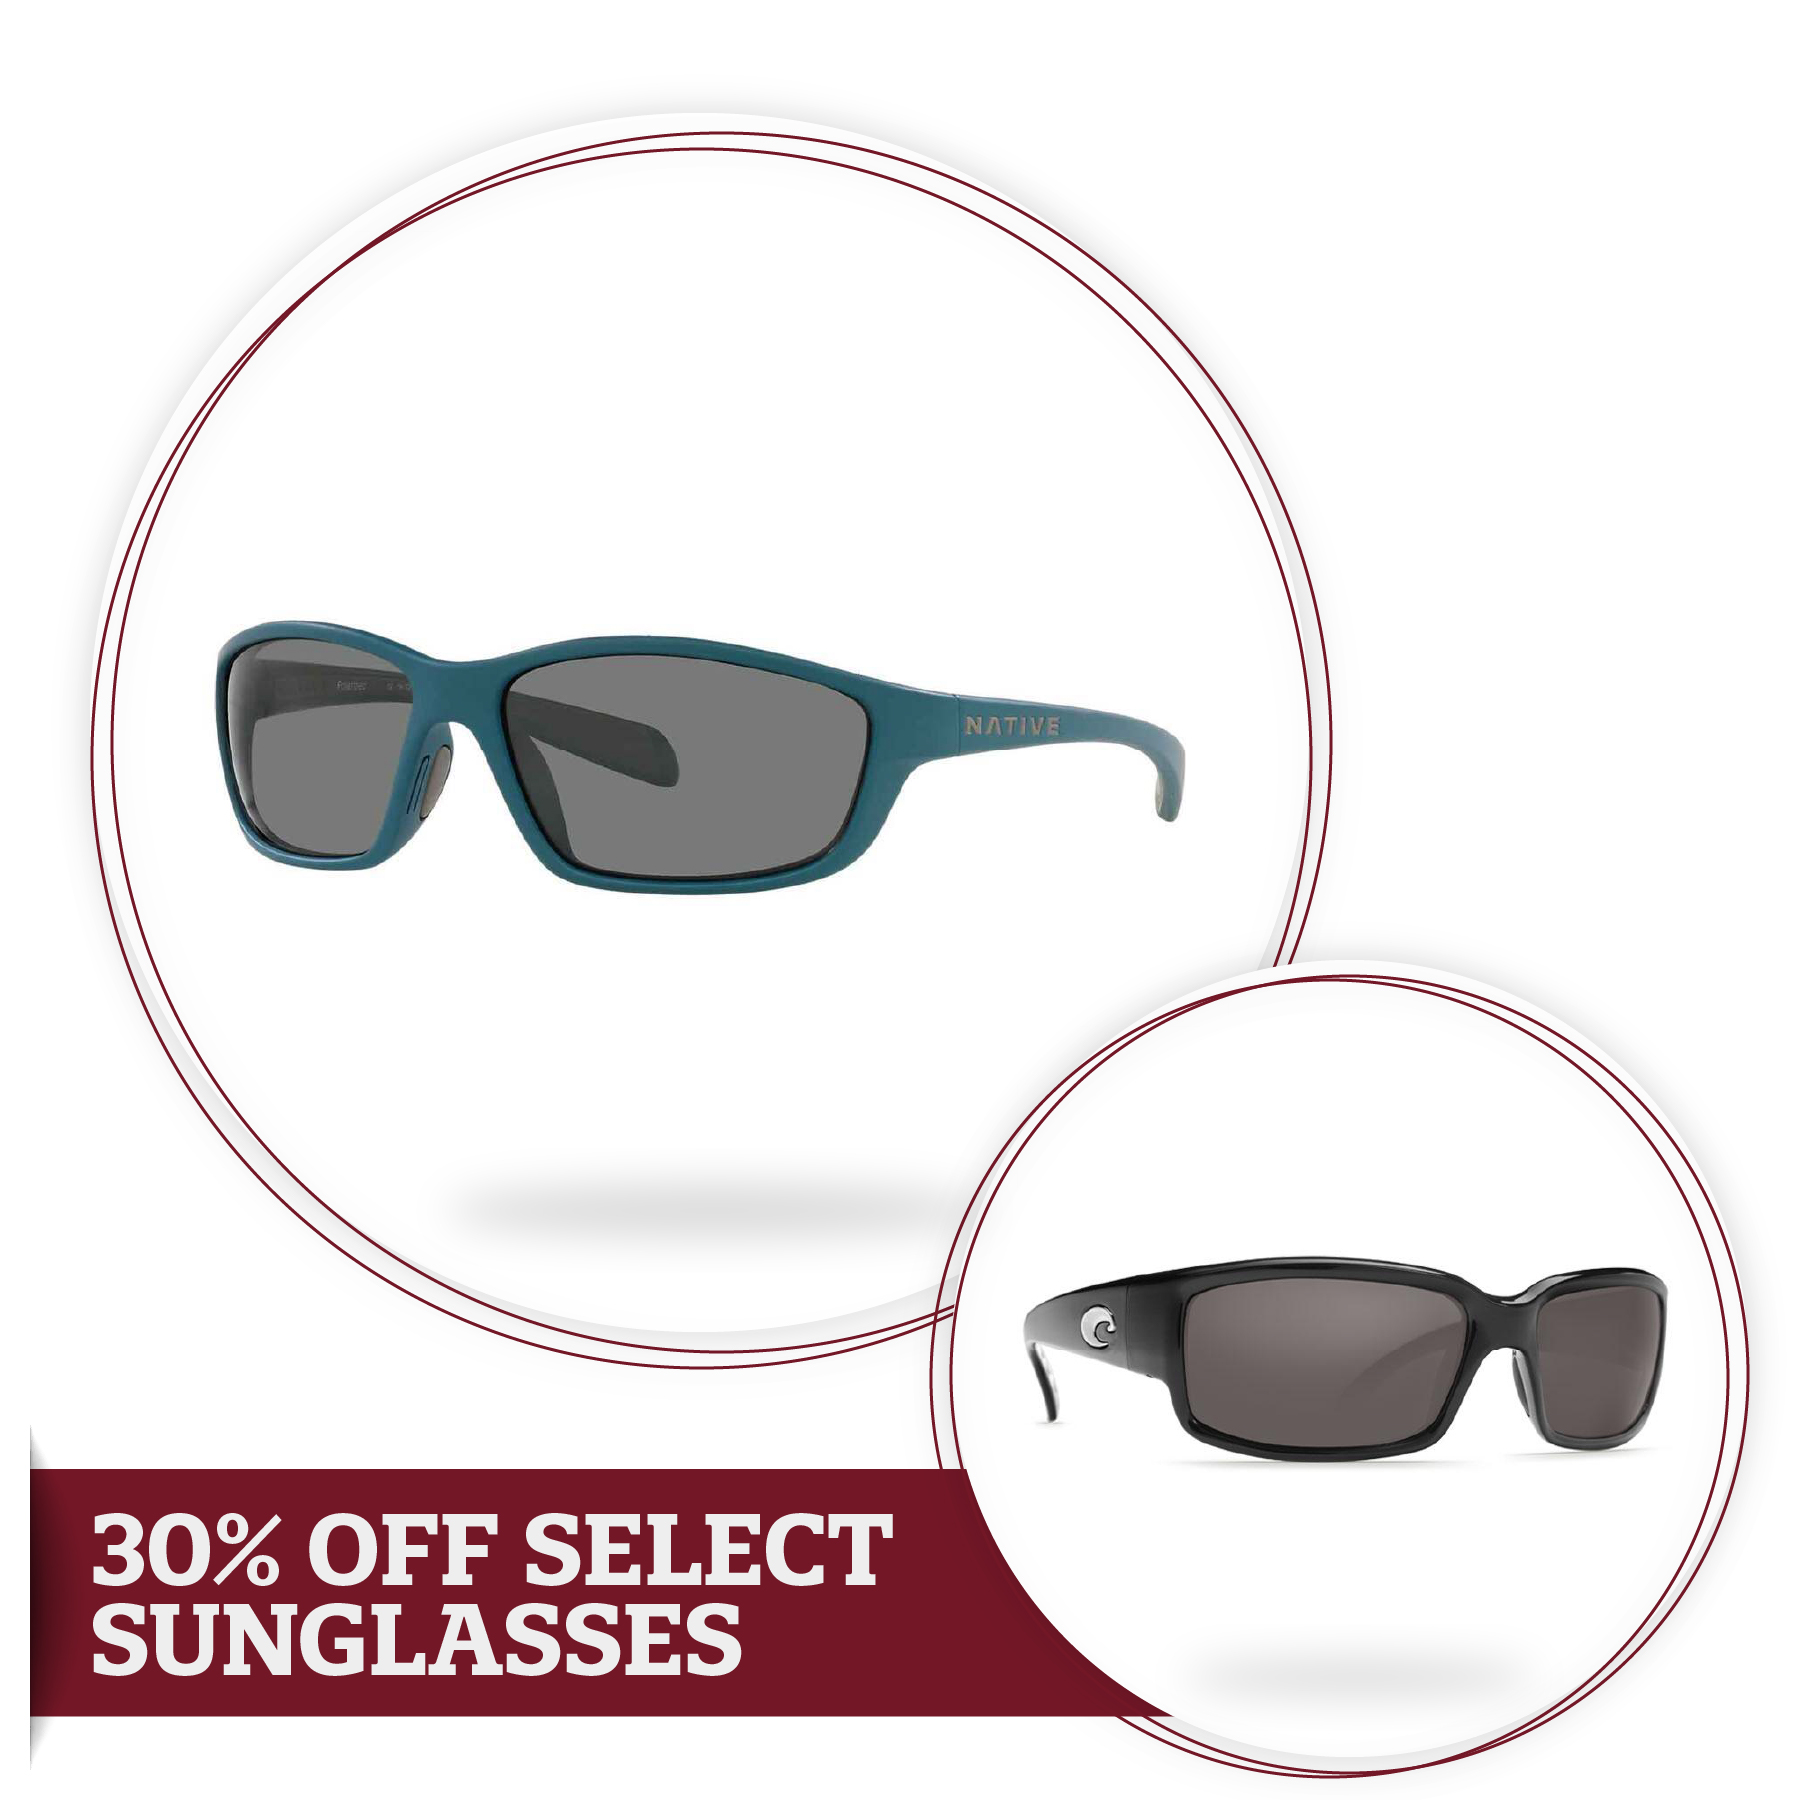 30% Off Sunglasses Sale 